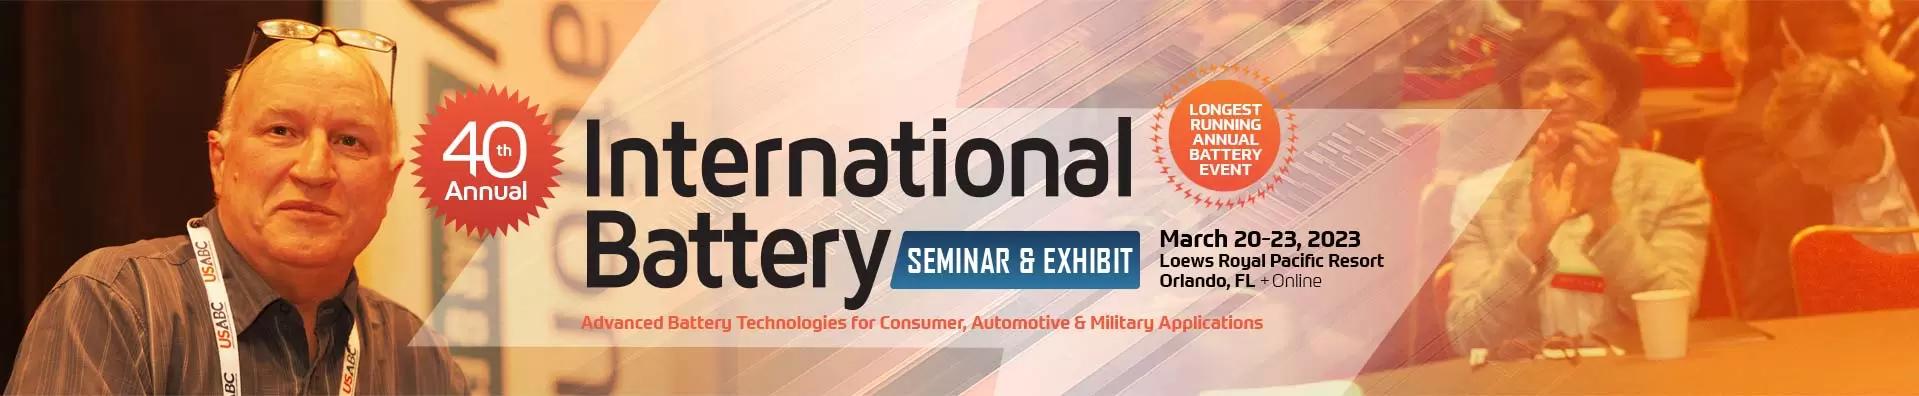 International Battery Seminar & Exhibit 2023